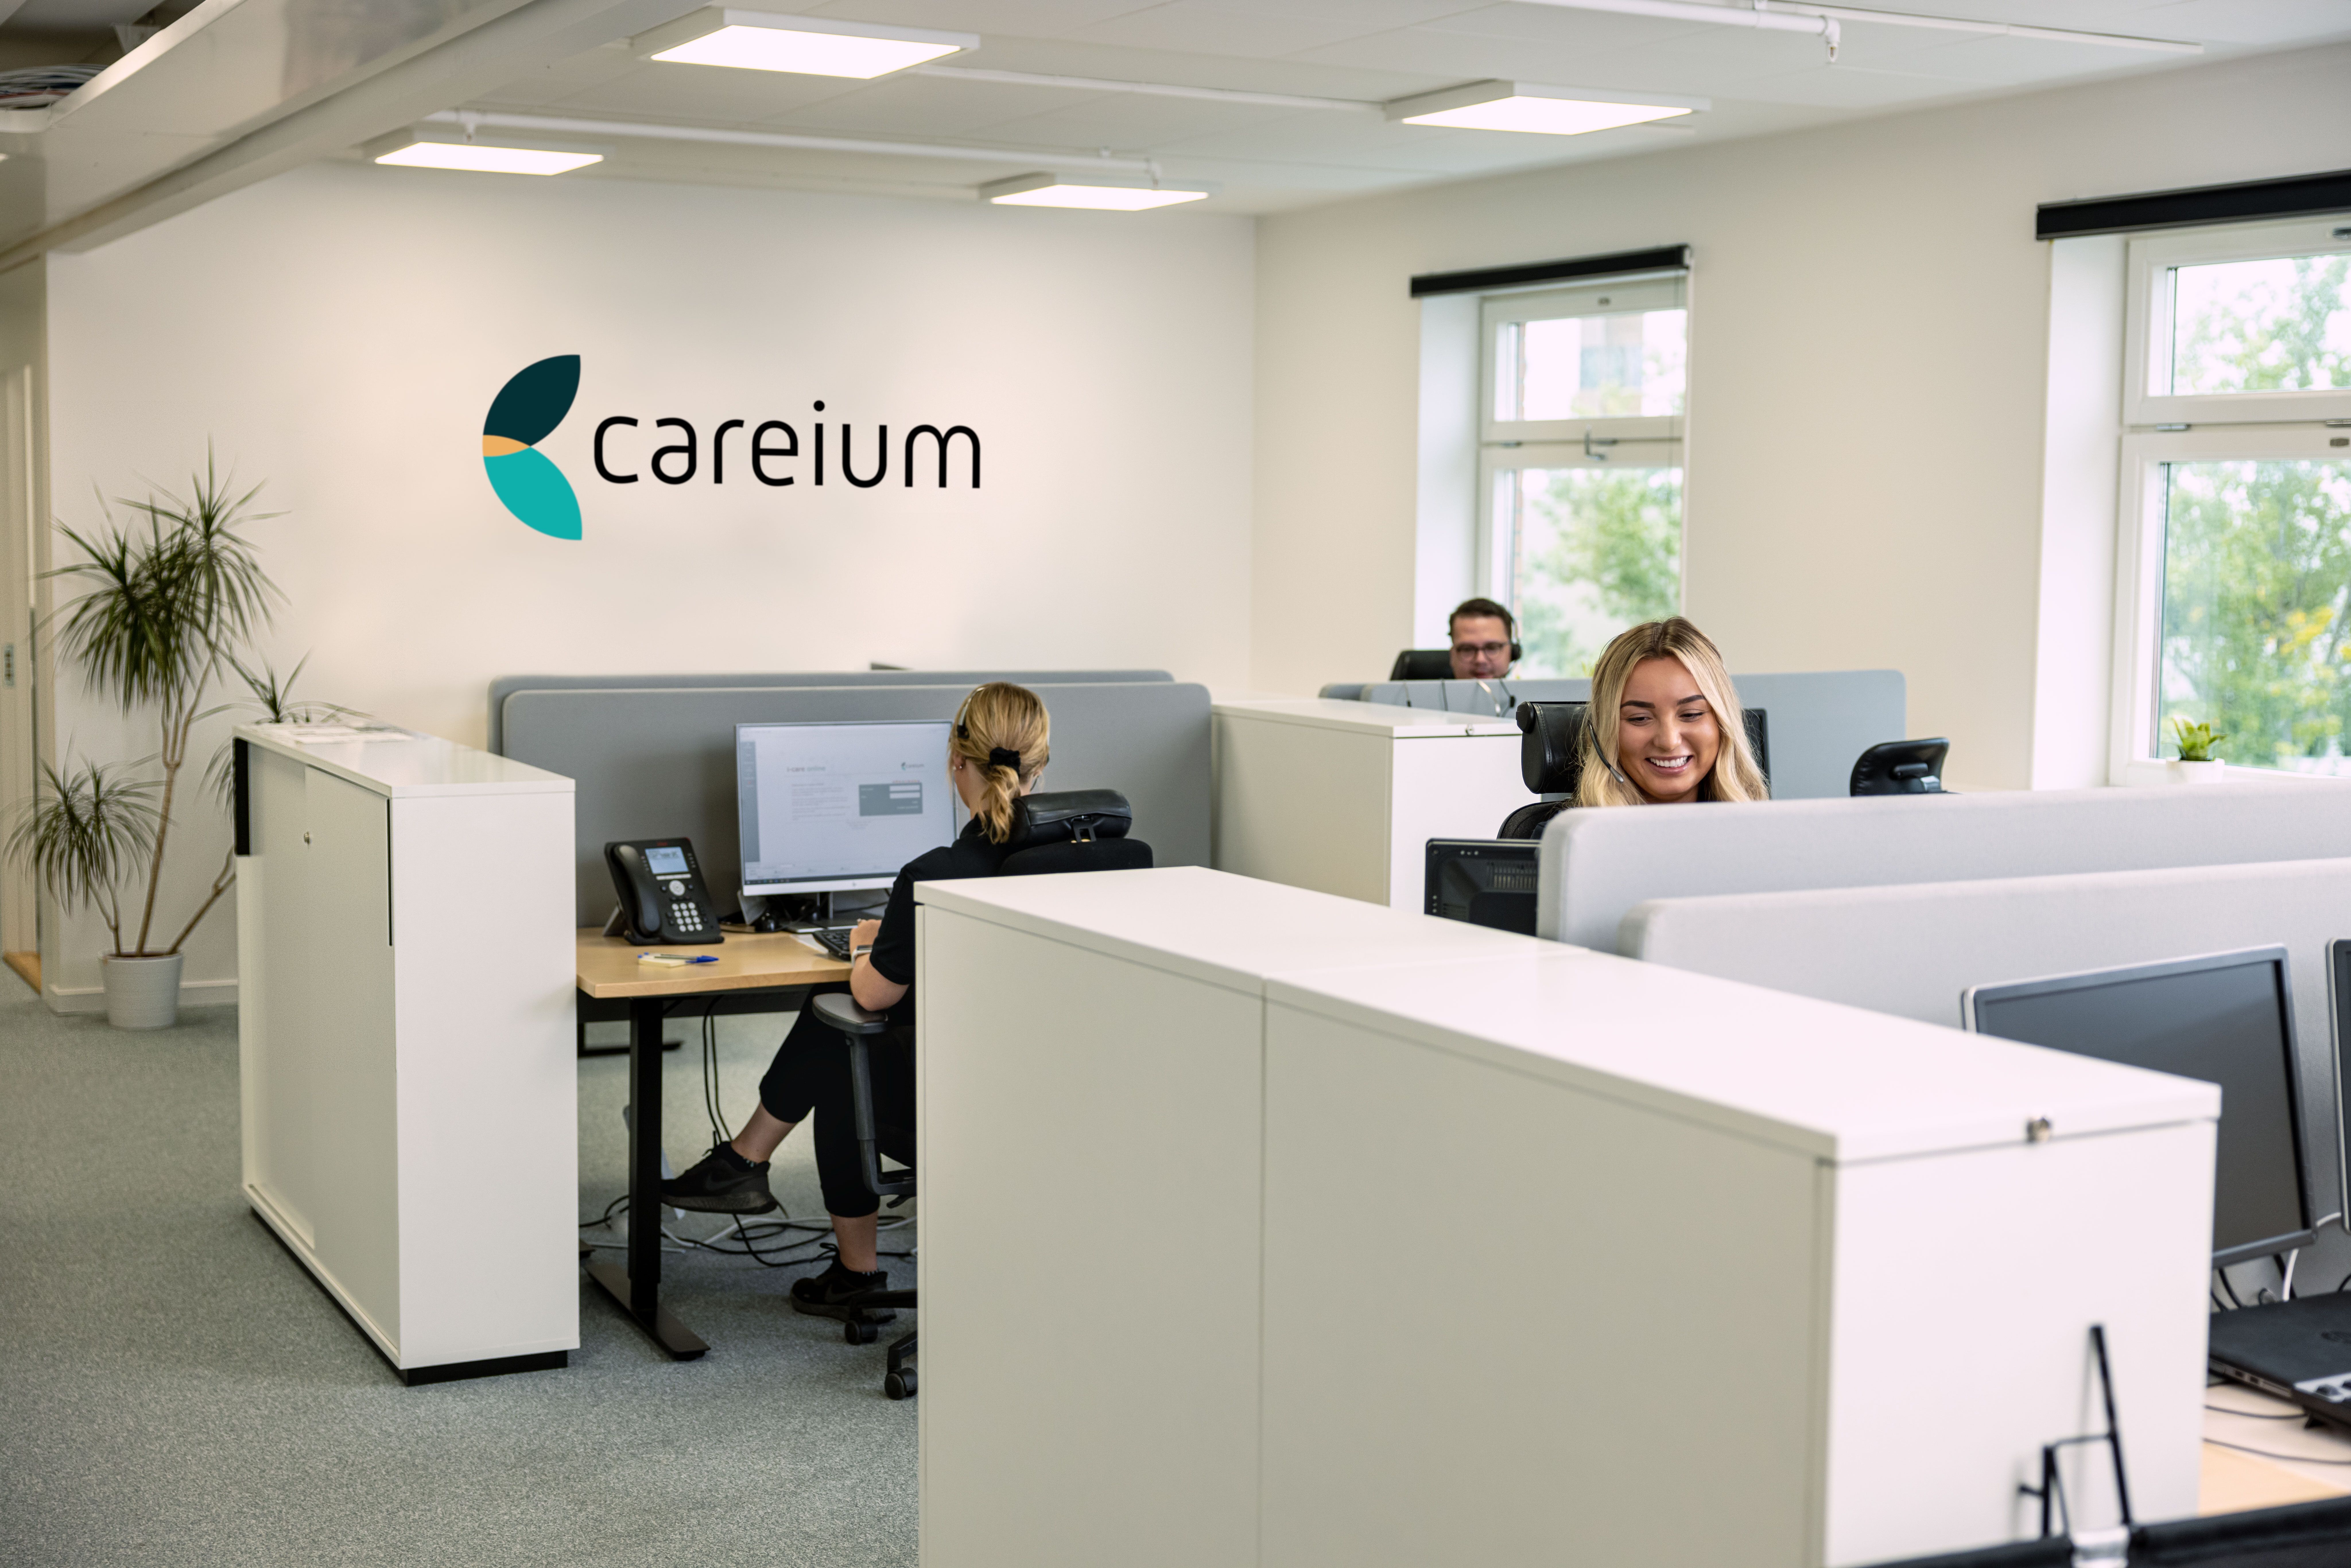 Introducing our new name Careium.